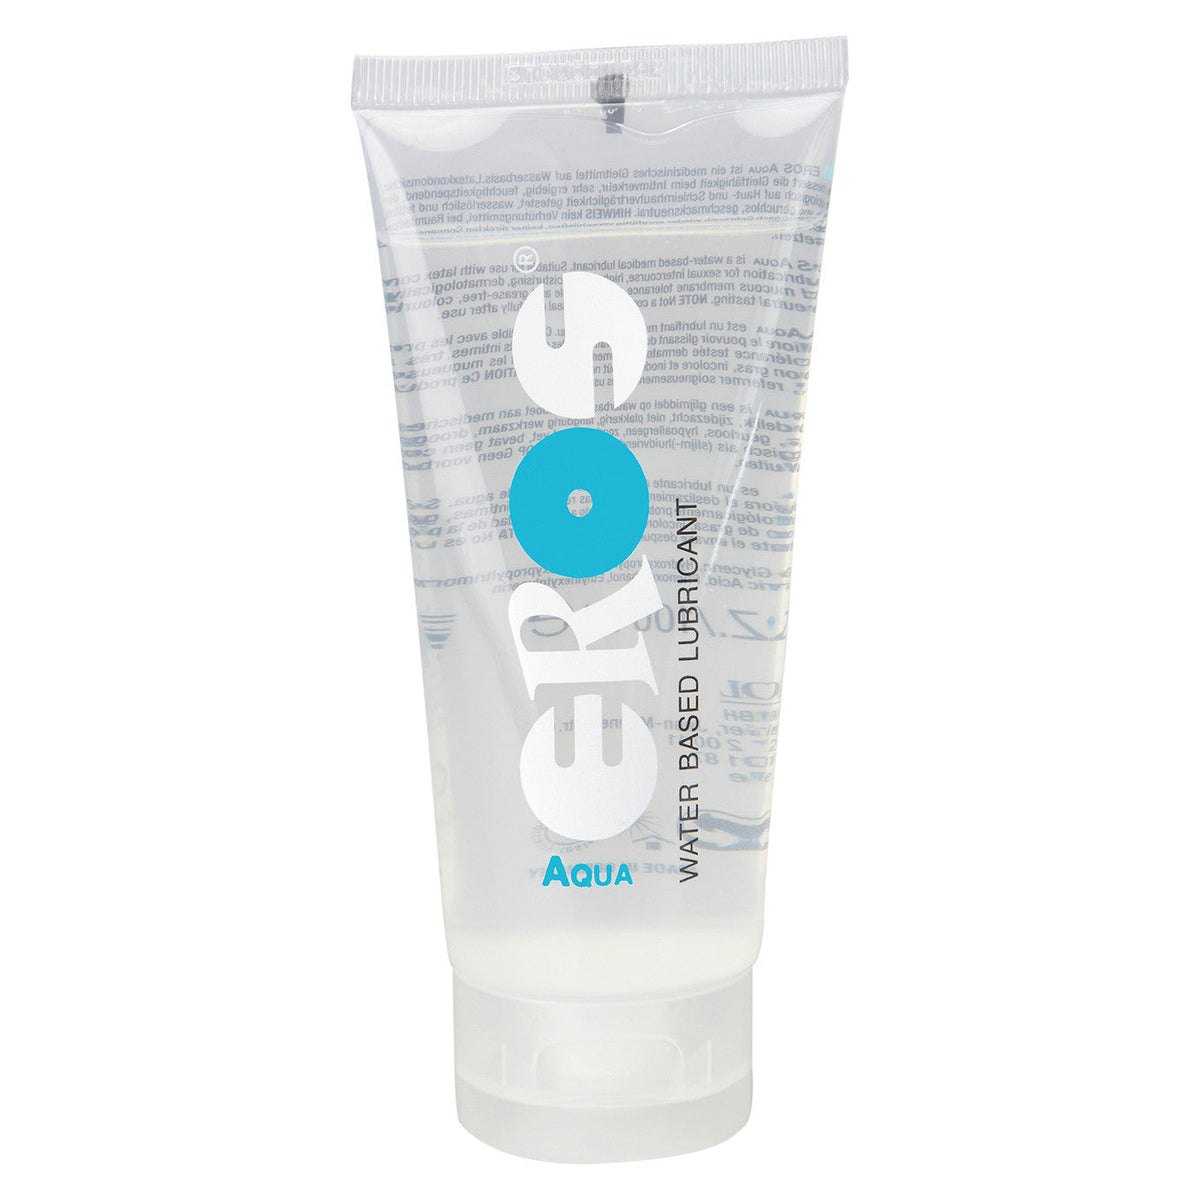 Eros - Aqua Water Based Lubricant 100ml -  Lube (Water Based)  Durio.sg